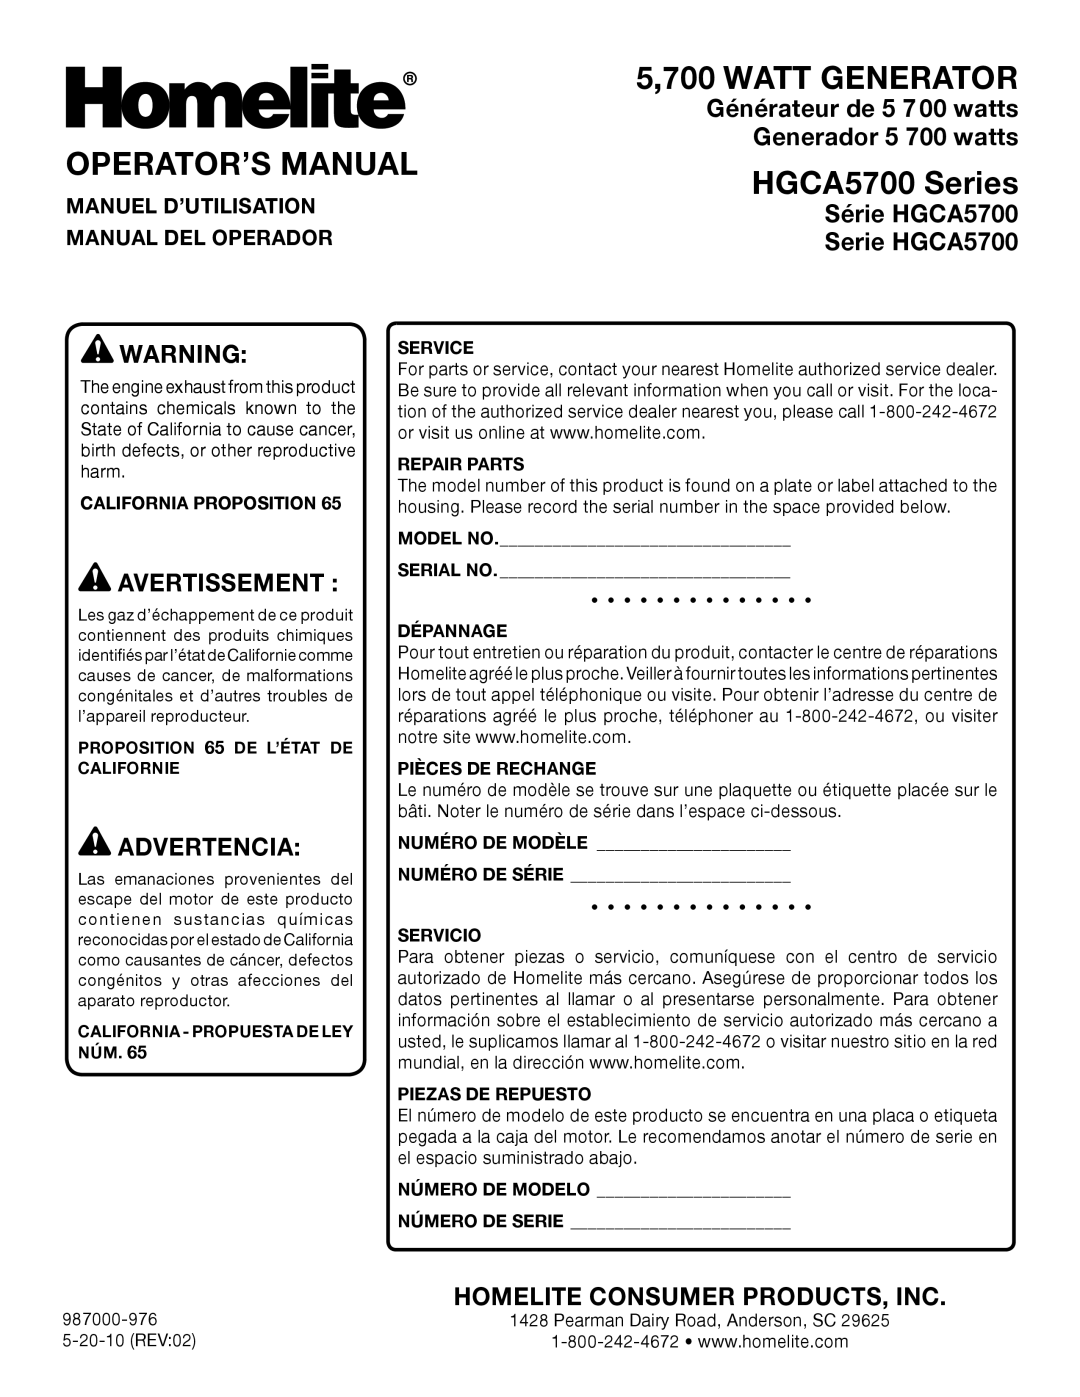 Homelite HGCA5700 Operator’S Manual, 5,700 WATT GENERATOR, Générateur de 5 7 00 watts, Generador 5 700 watts, Advertencia 